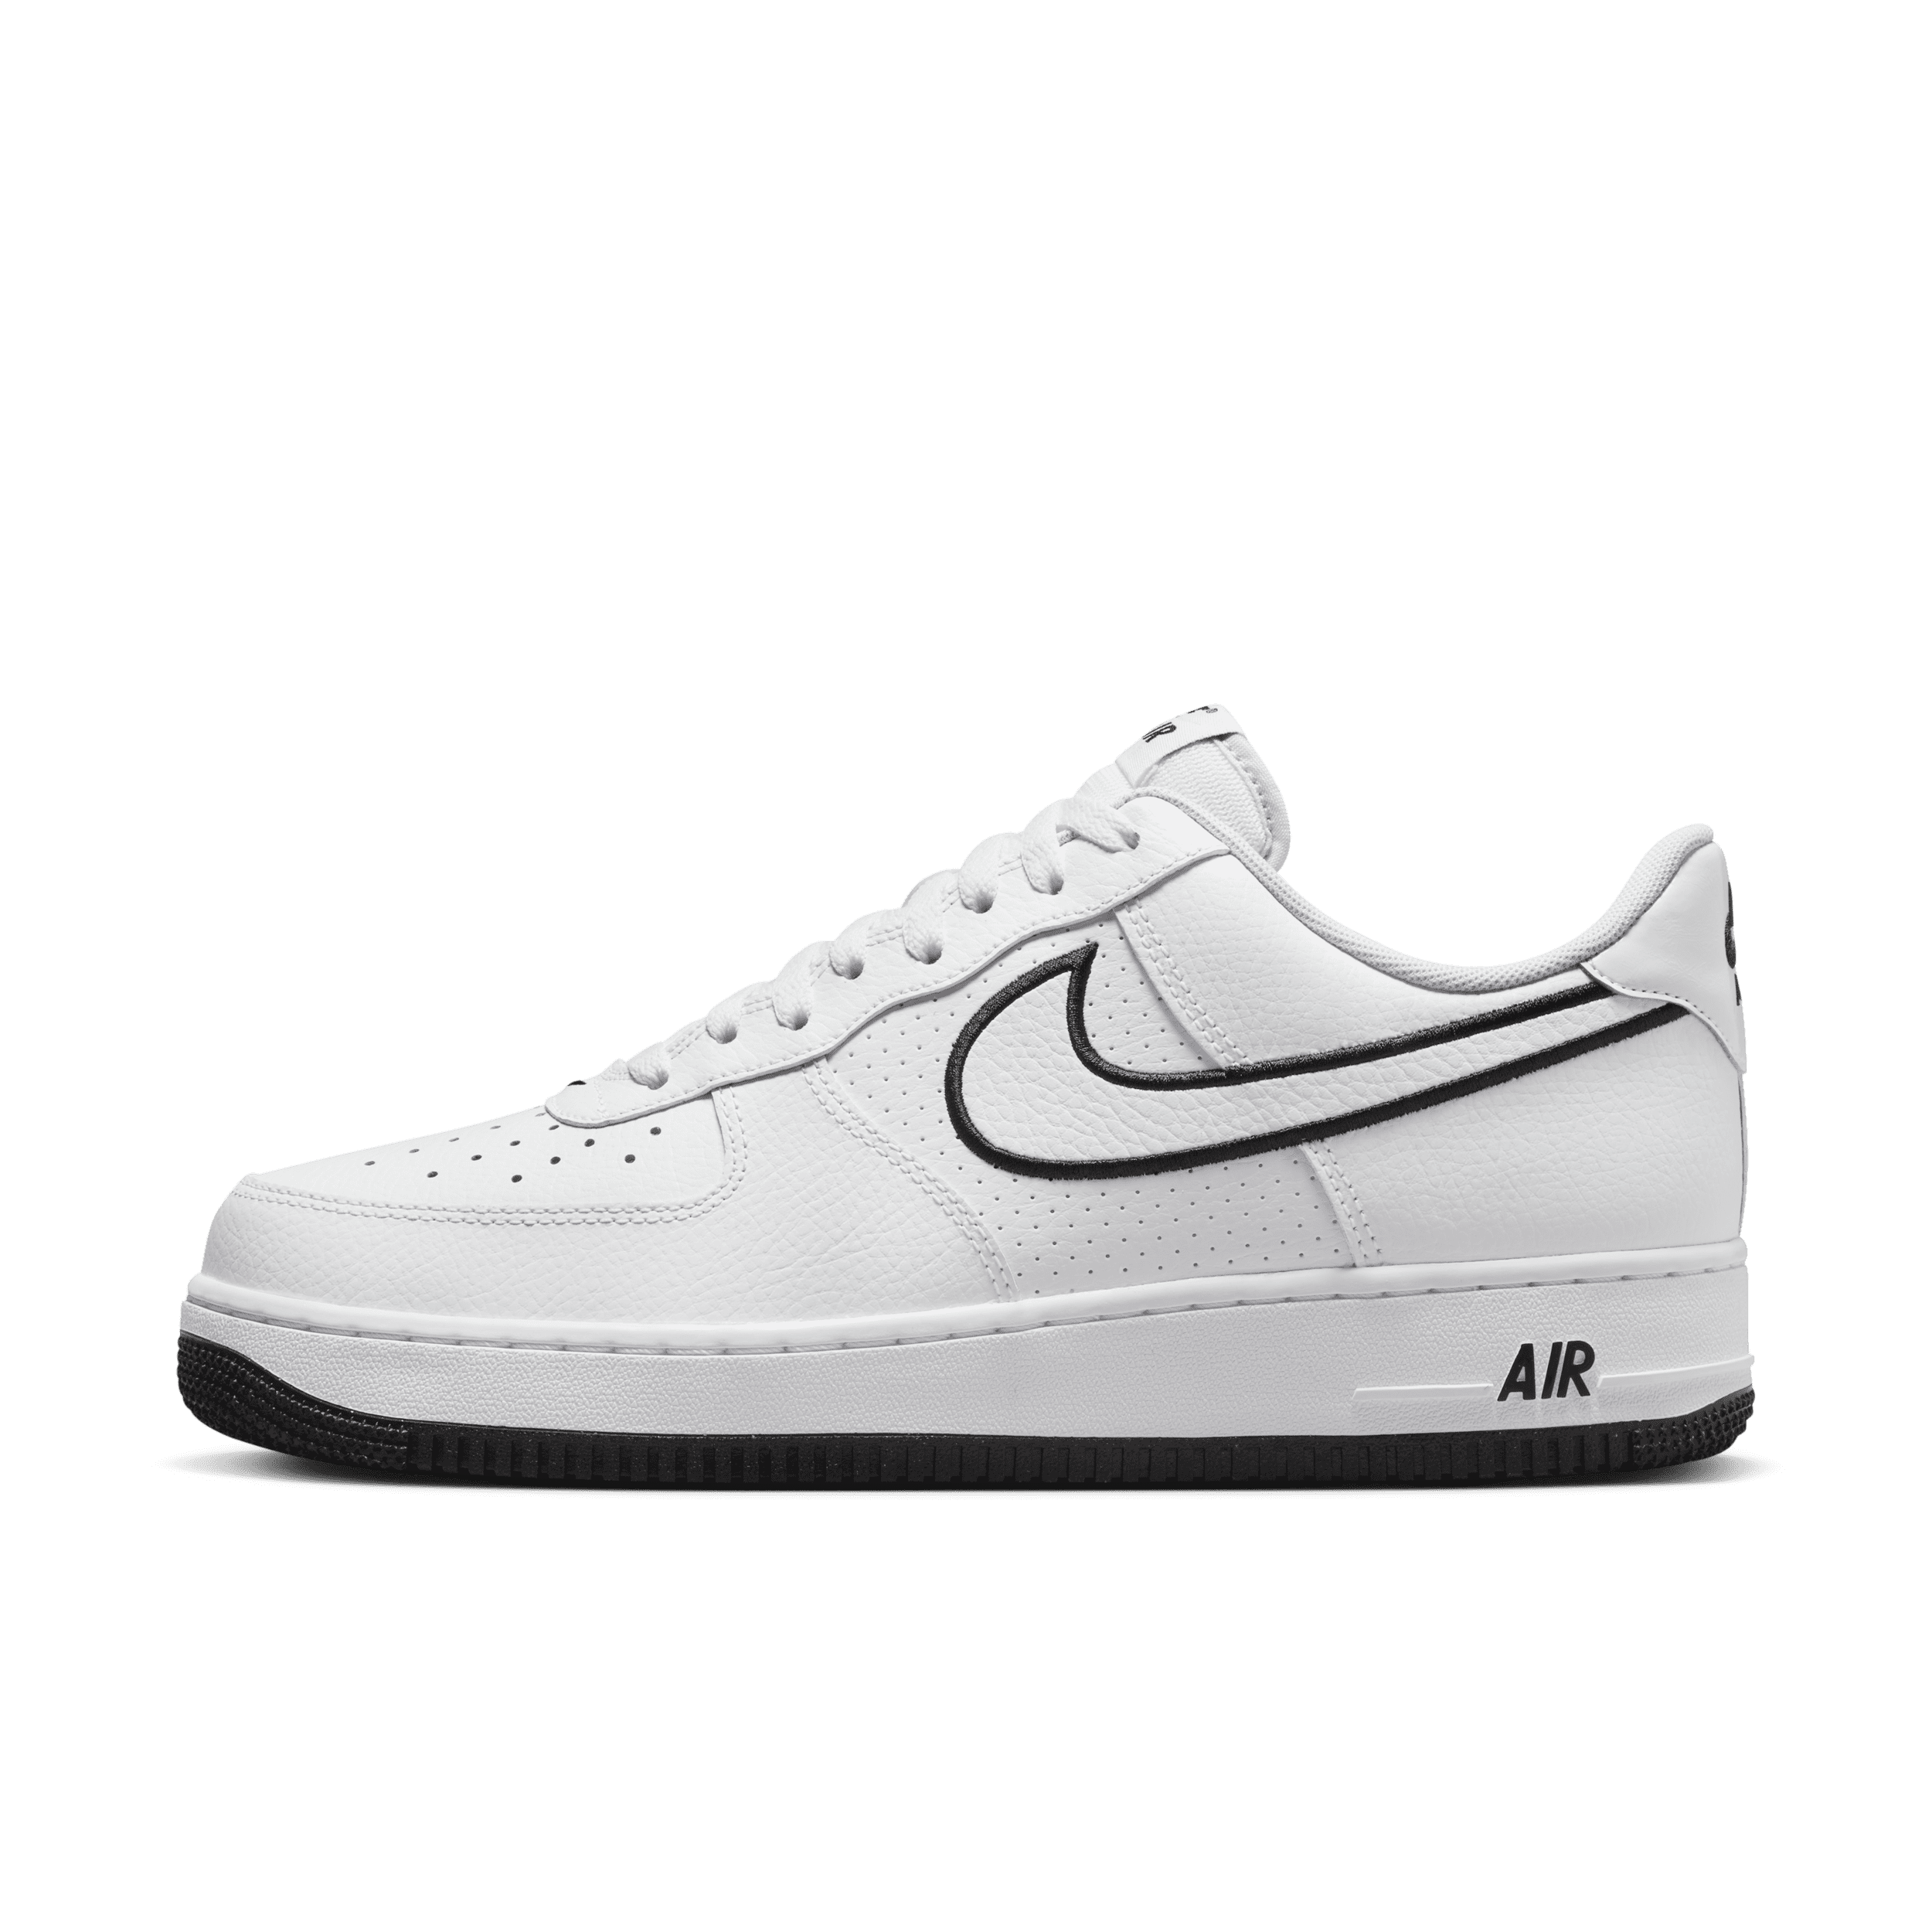 Nike Air Force 1 ’07 Herenschoenen – Wit